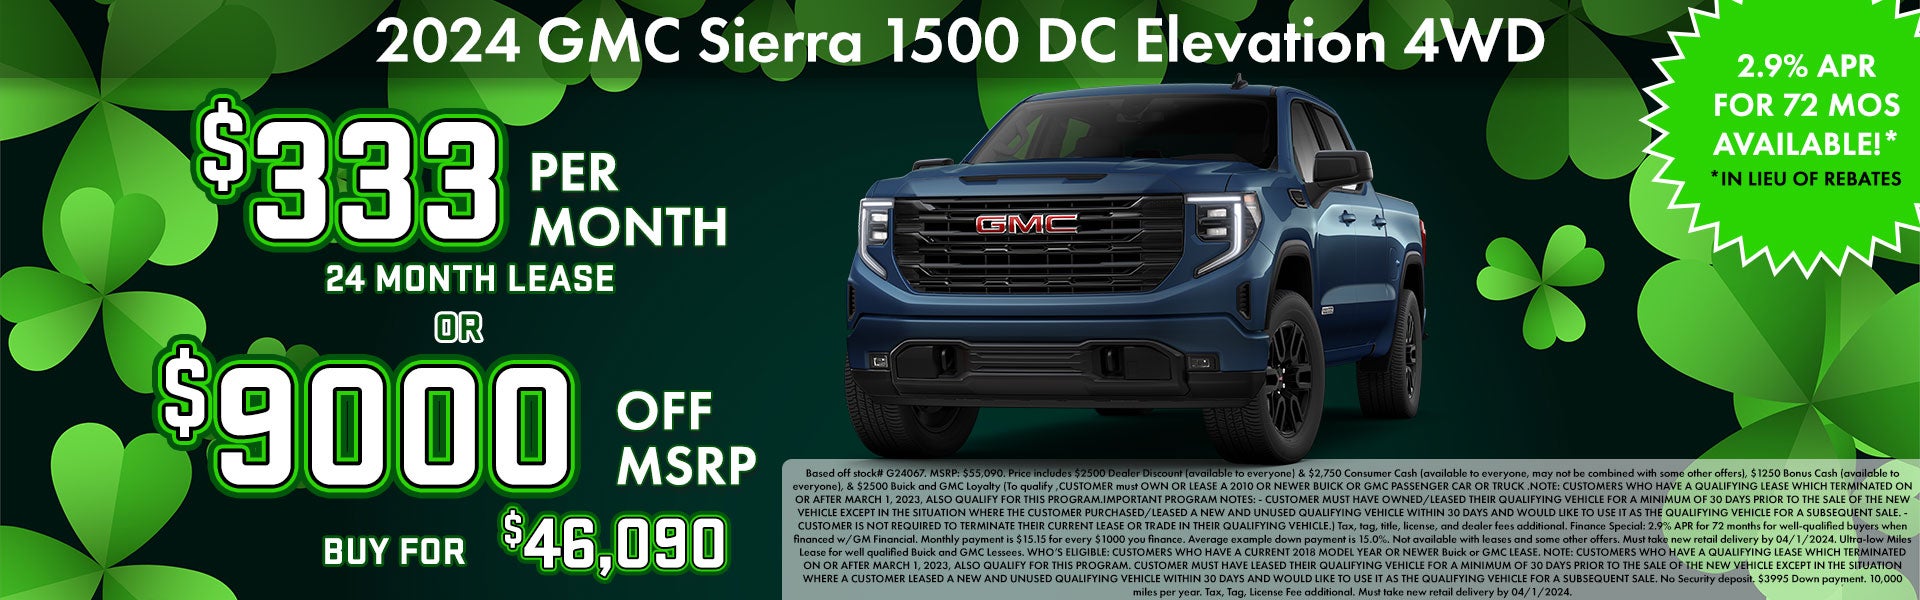 Sierra 1500 Lease Special